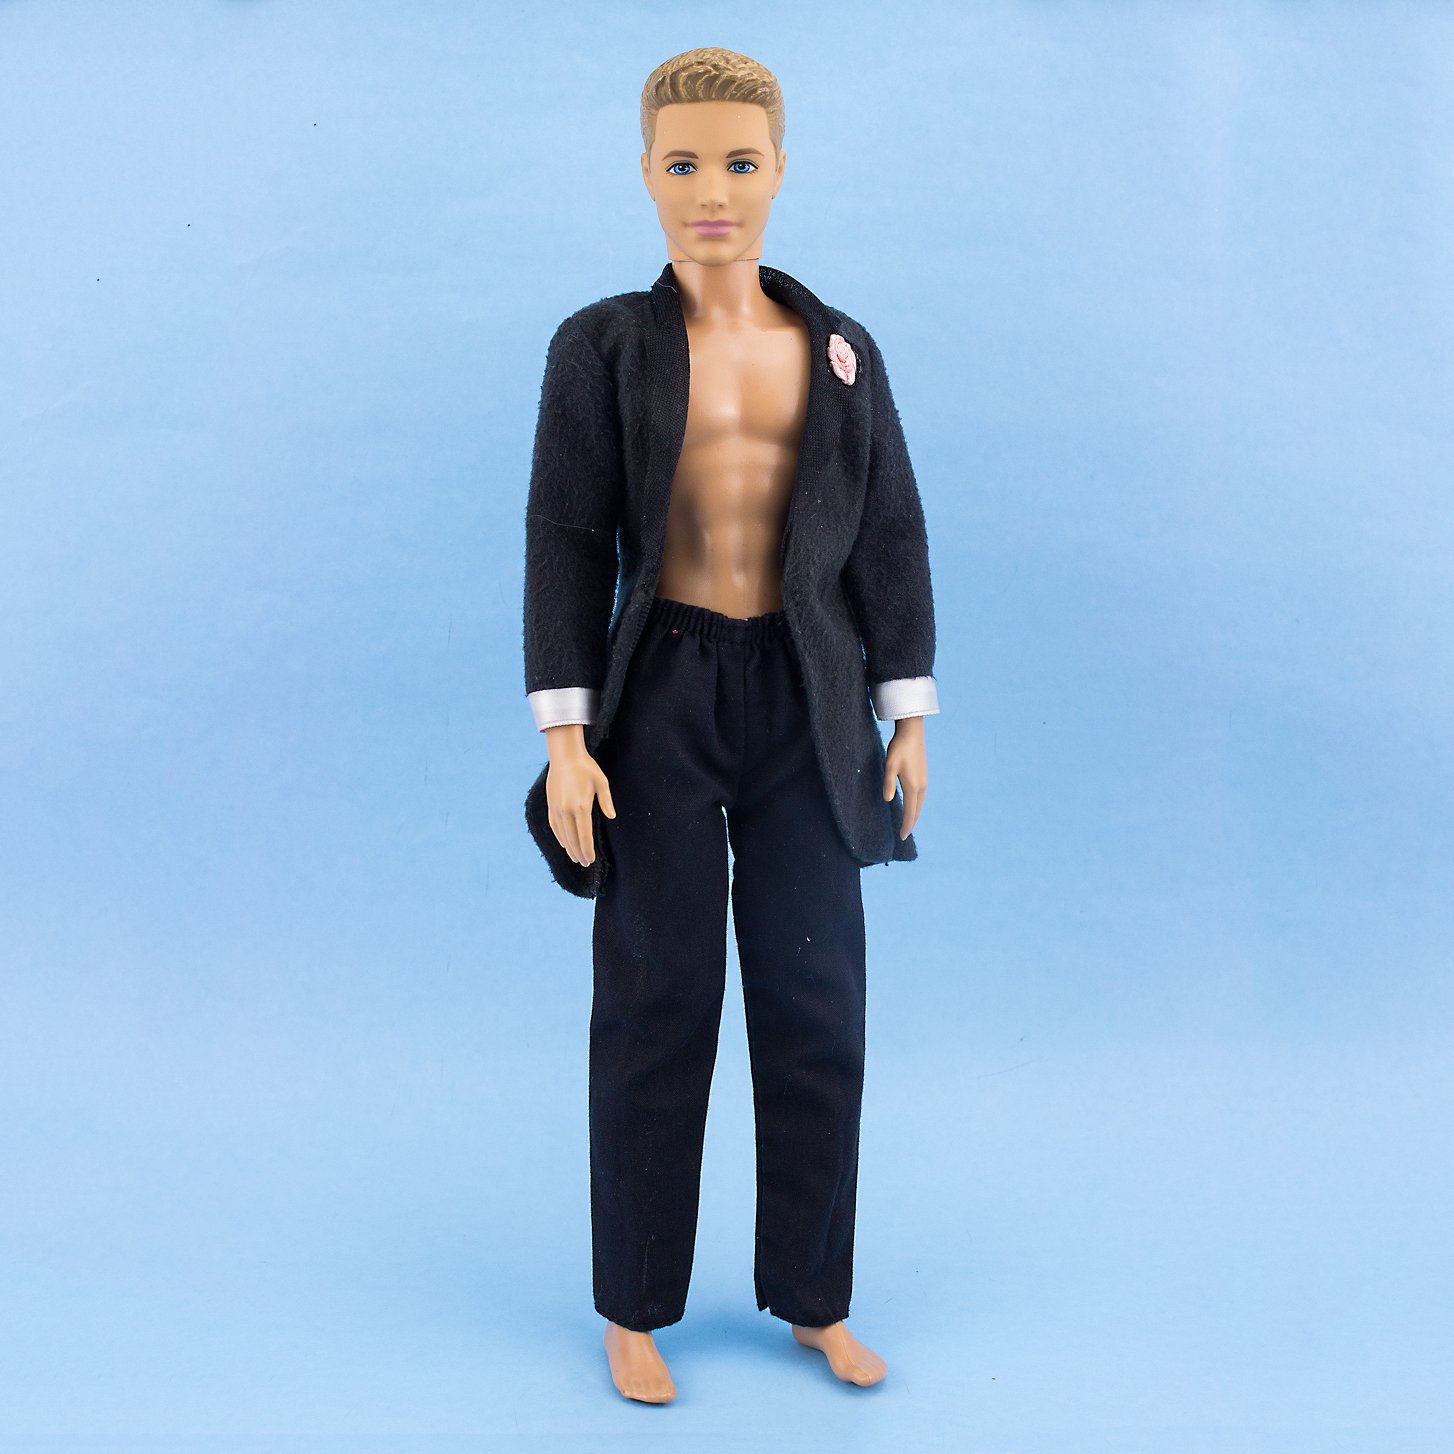 Boneco Barbie Ken Noivo - Mattel  (Removido da Caixa)